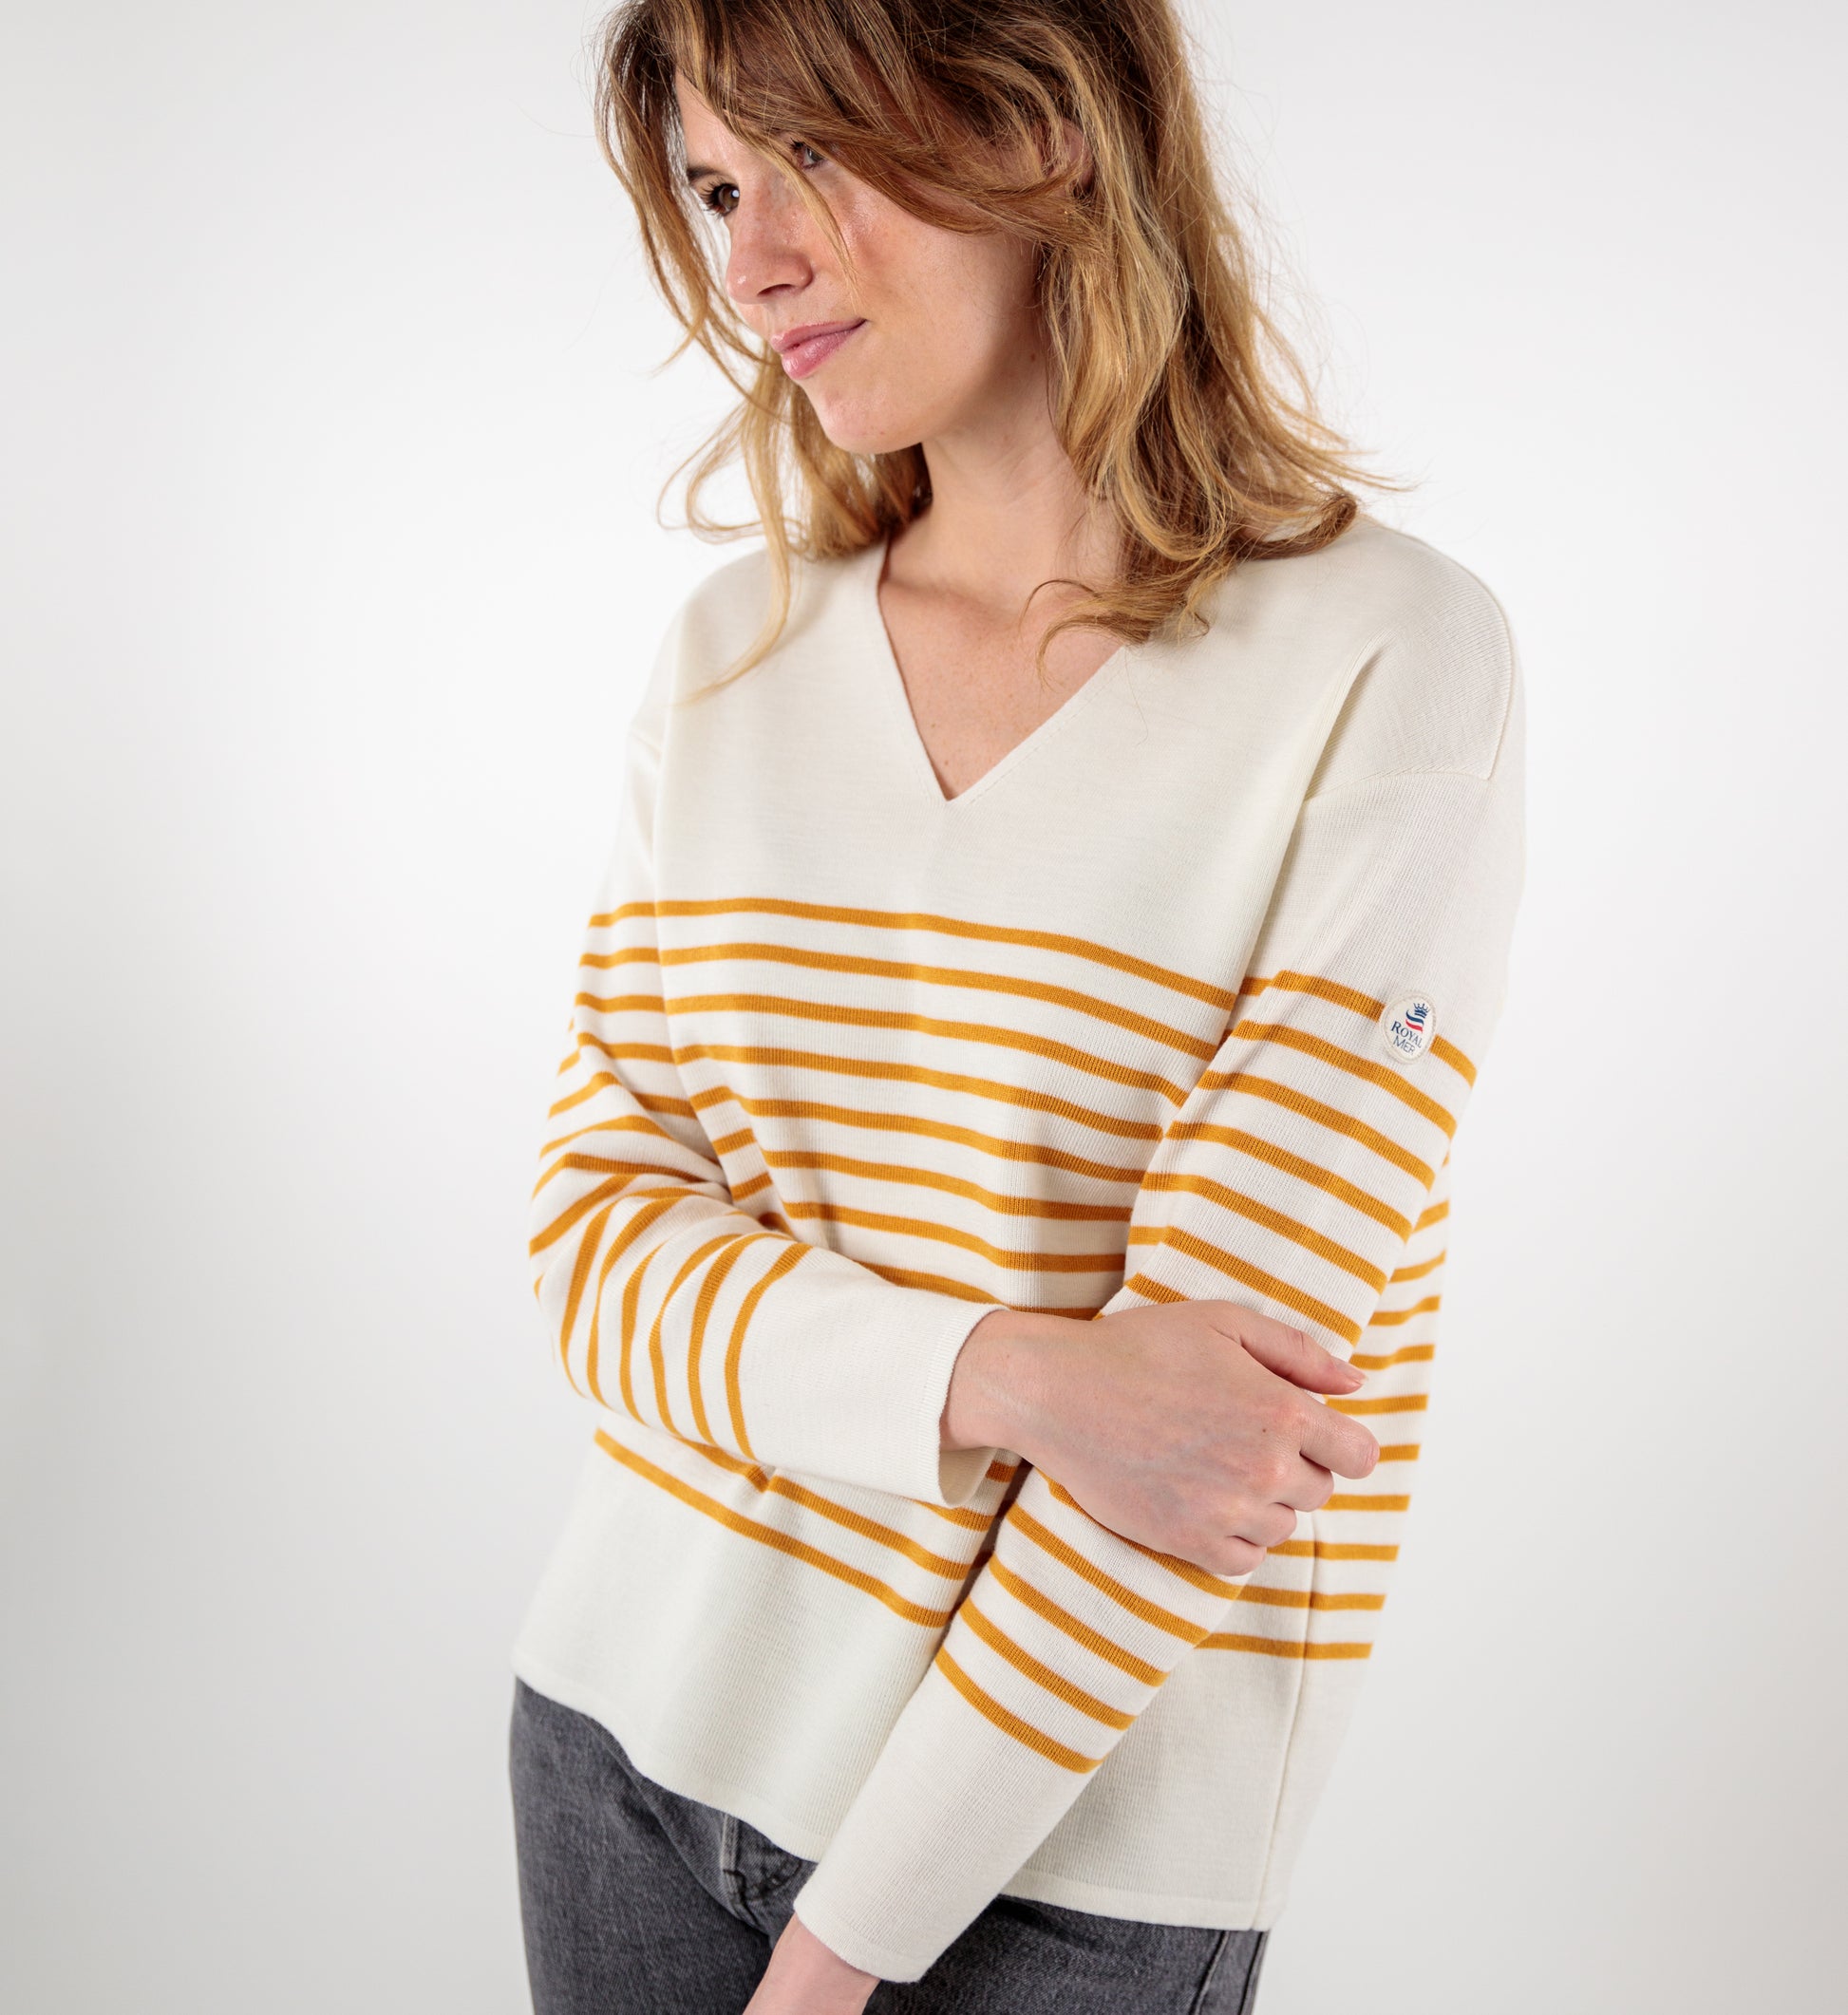 Striped v-neck sweater